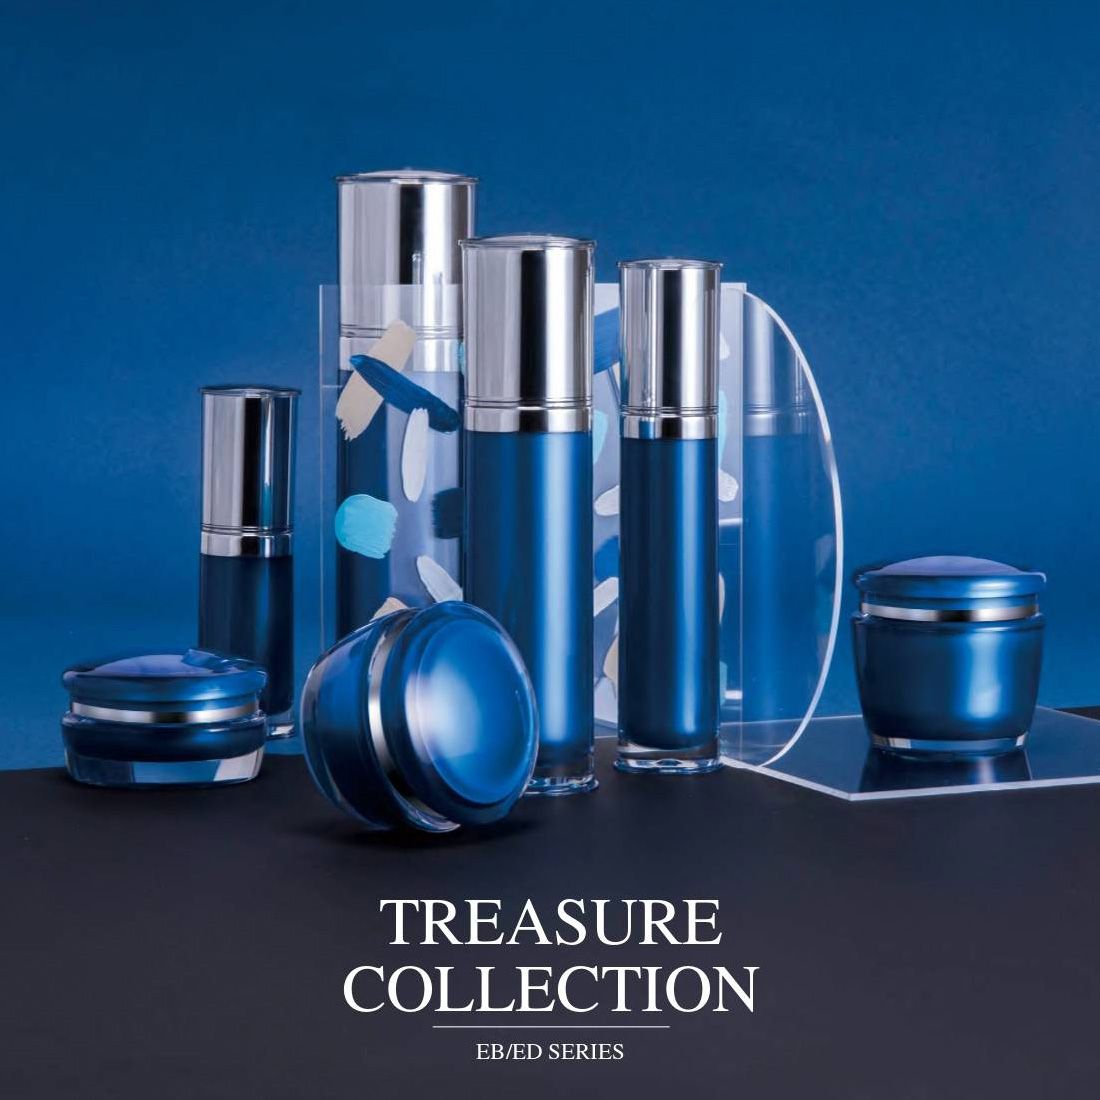 Treasure Collection (아크릴 럭셔리 화장품 및 스킨케어 패키징) EB/ED 시리즈